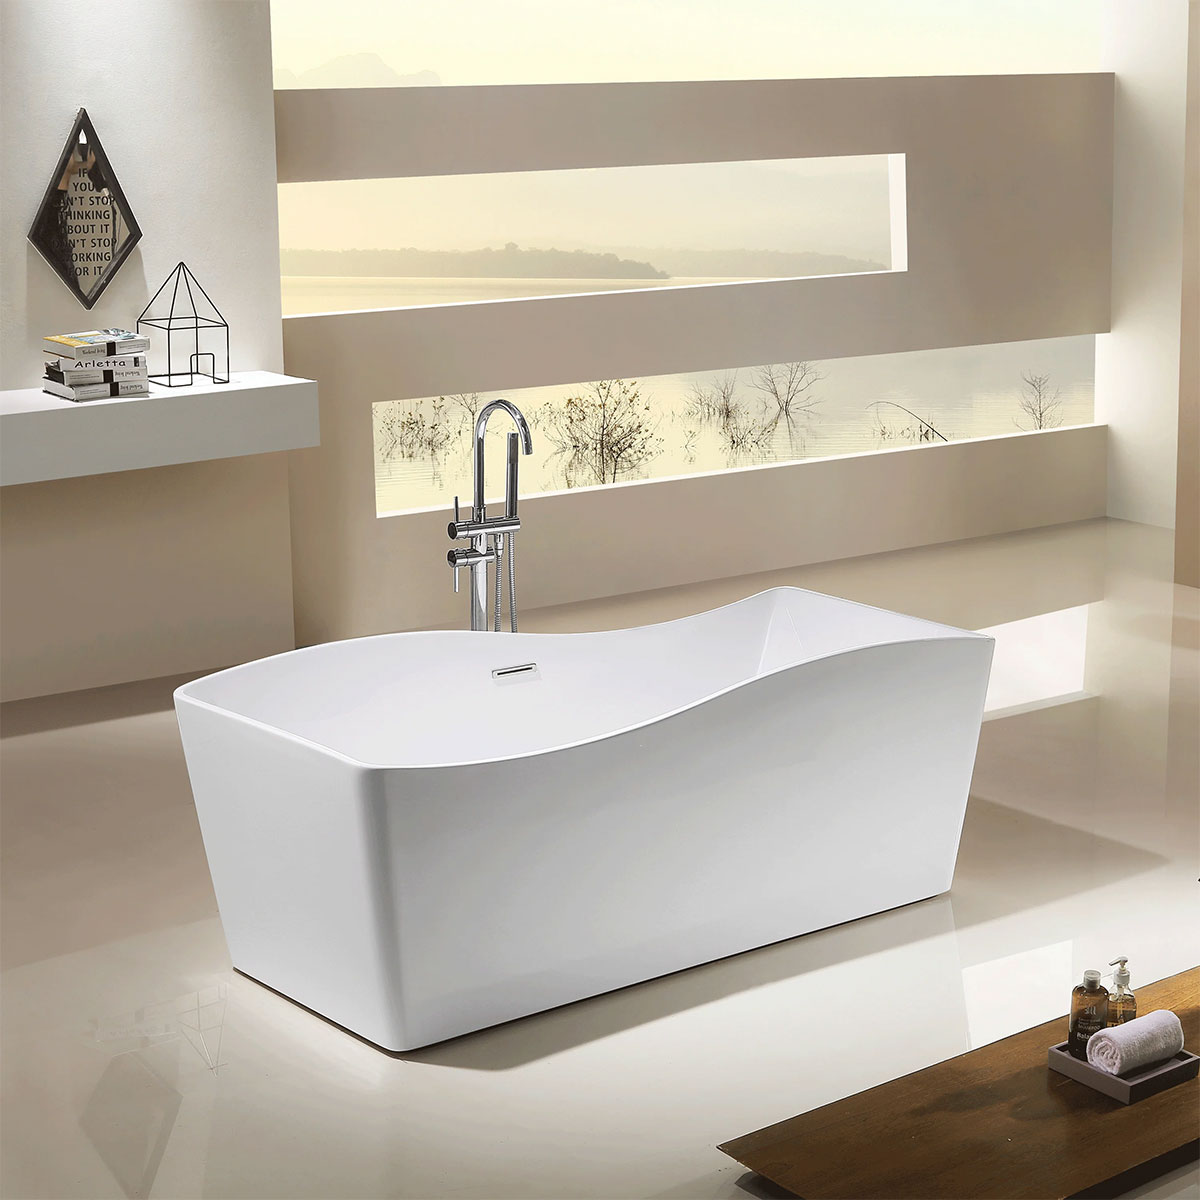 Acrylic Freestanding Bathtub, rectangle with top wave shape